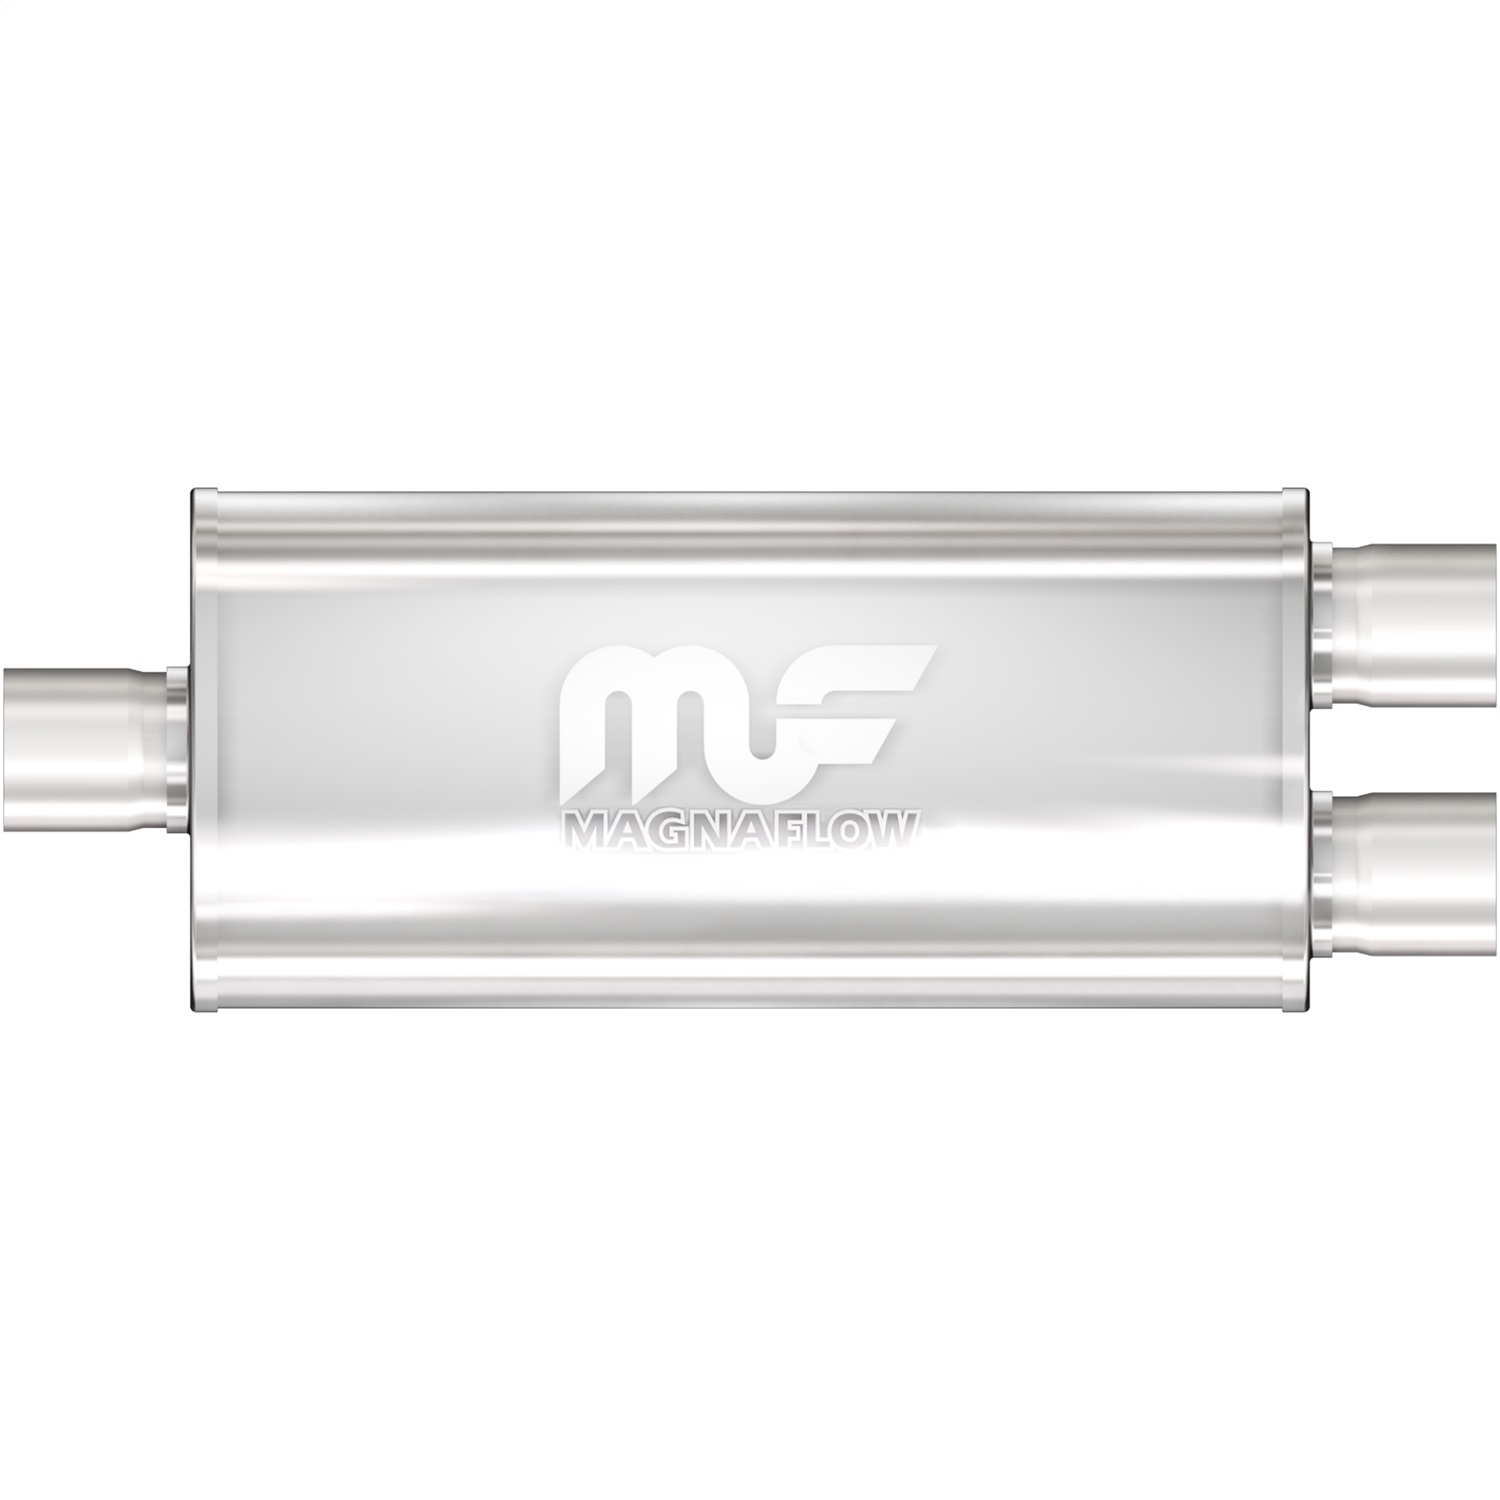 Magnaflow Performance Exhaust Magnaflow Performance Exhaust 12288 Stainless Steel Muffler